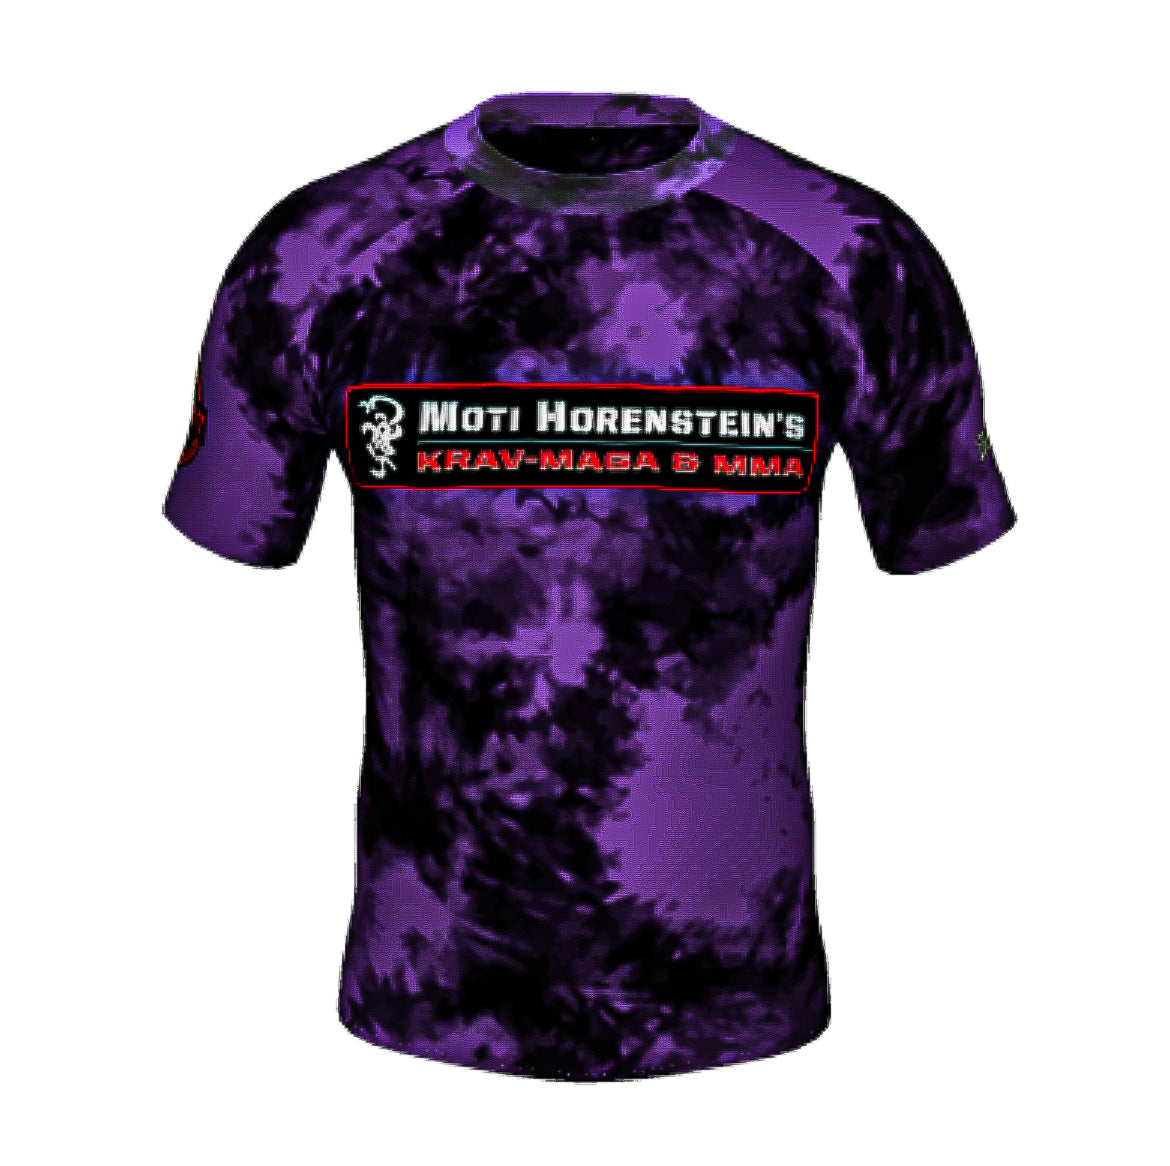 Purple Tie Dye Moti Horenstein Rashguard